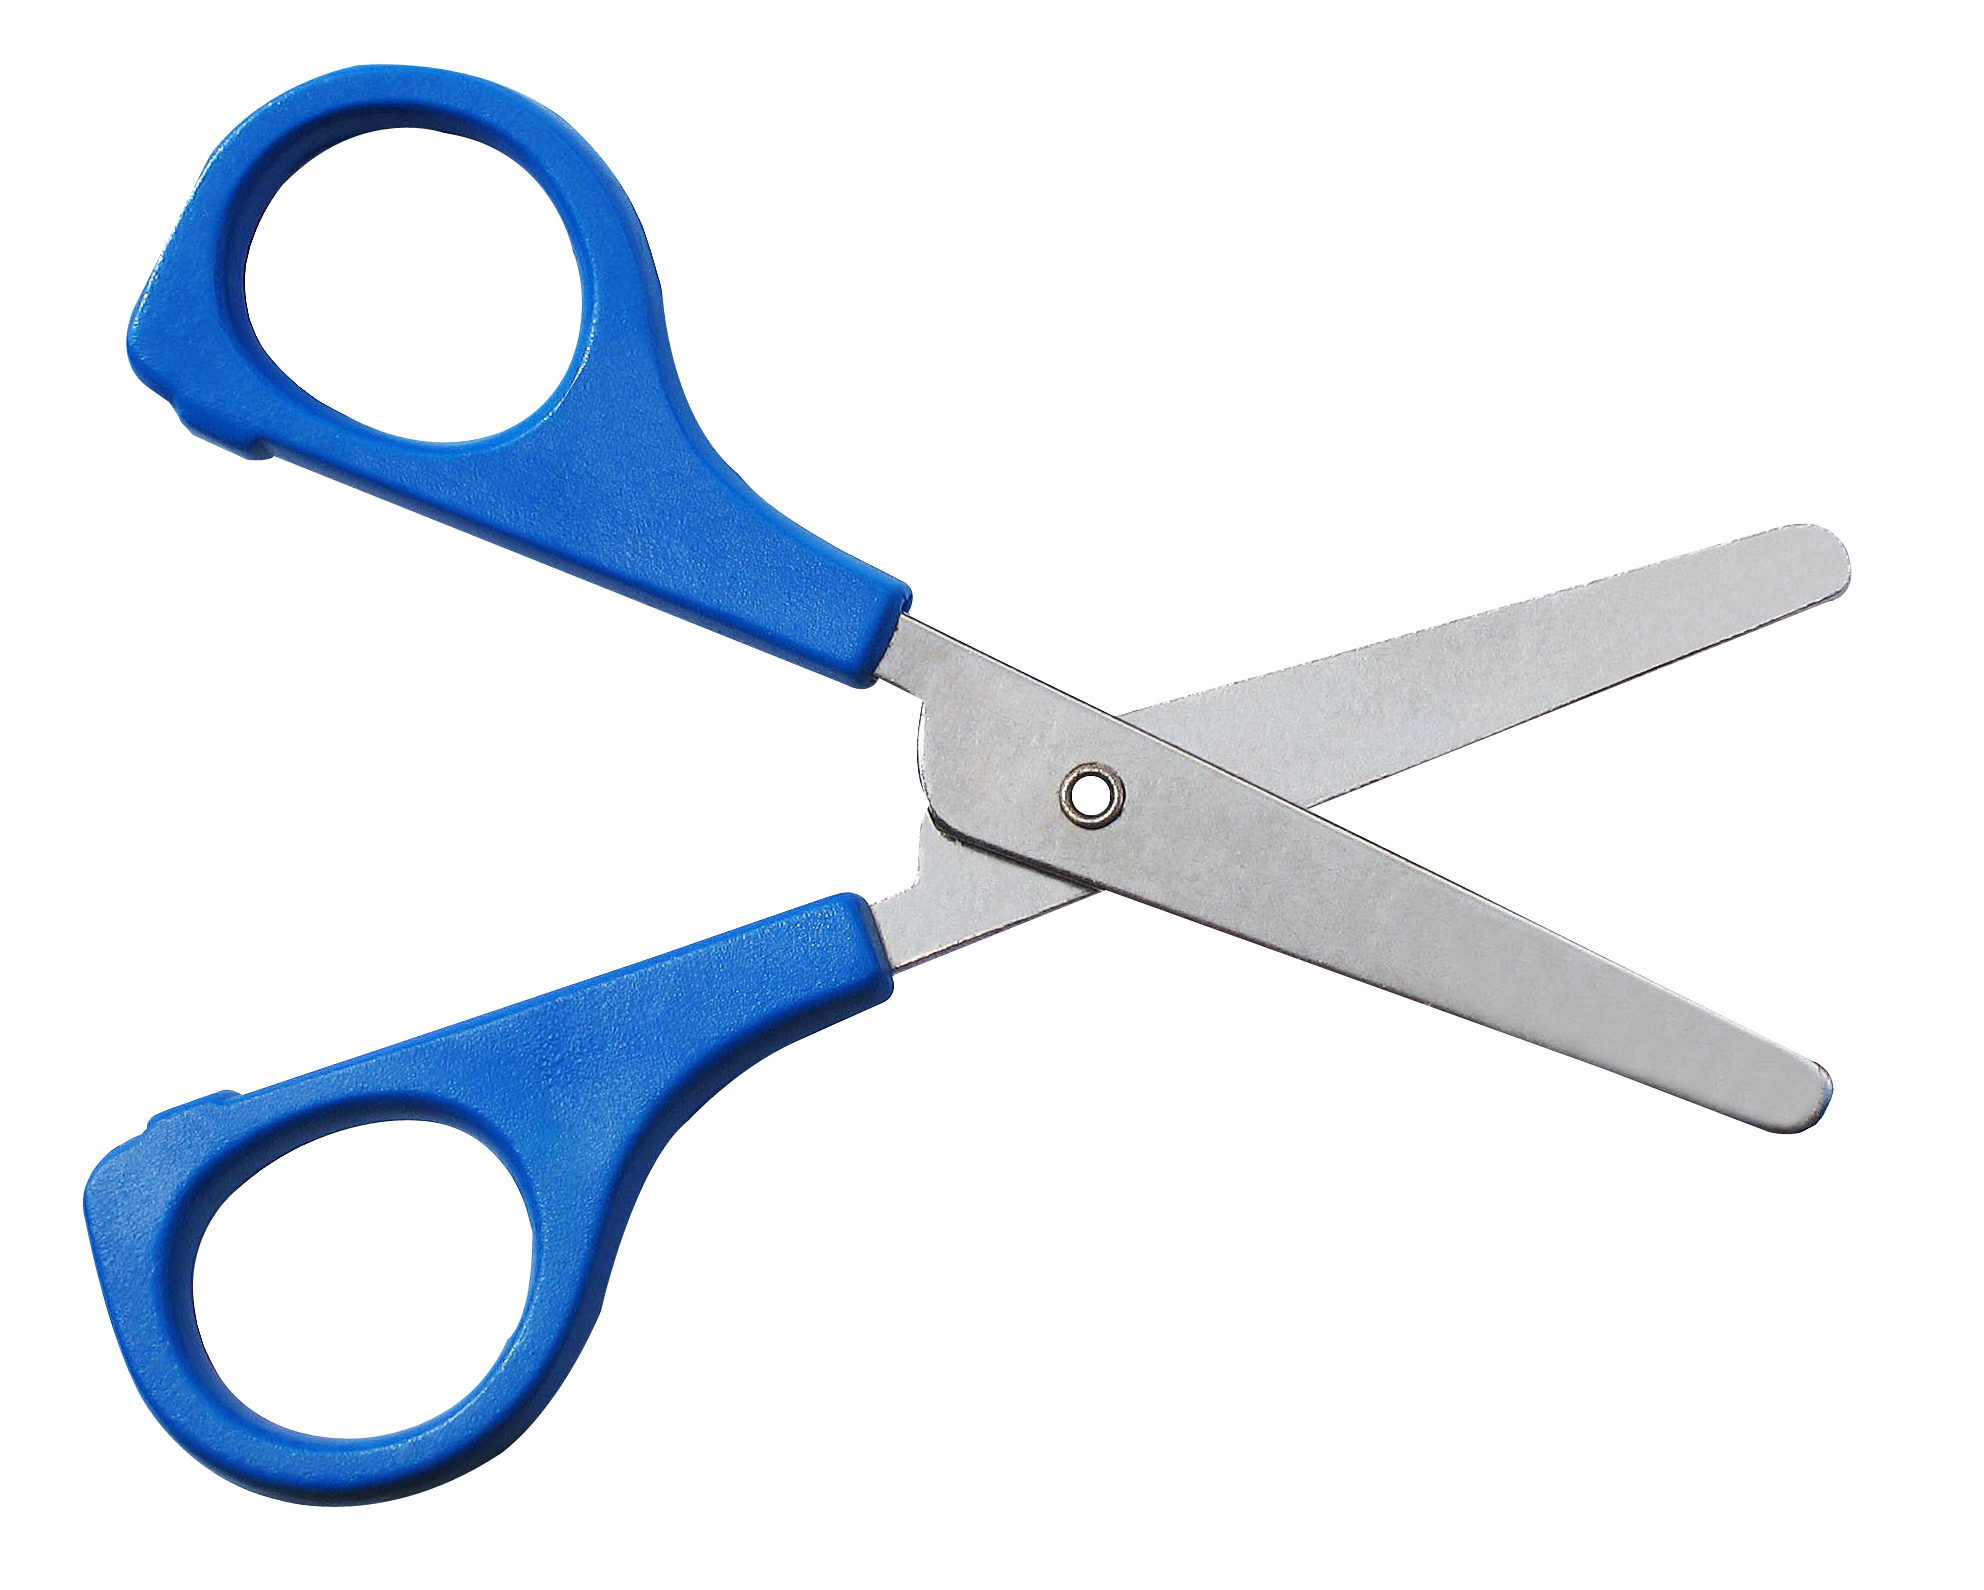 Scissors Png 1984 X 1590